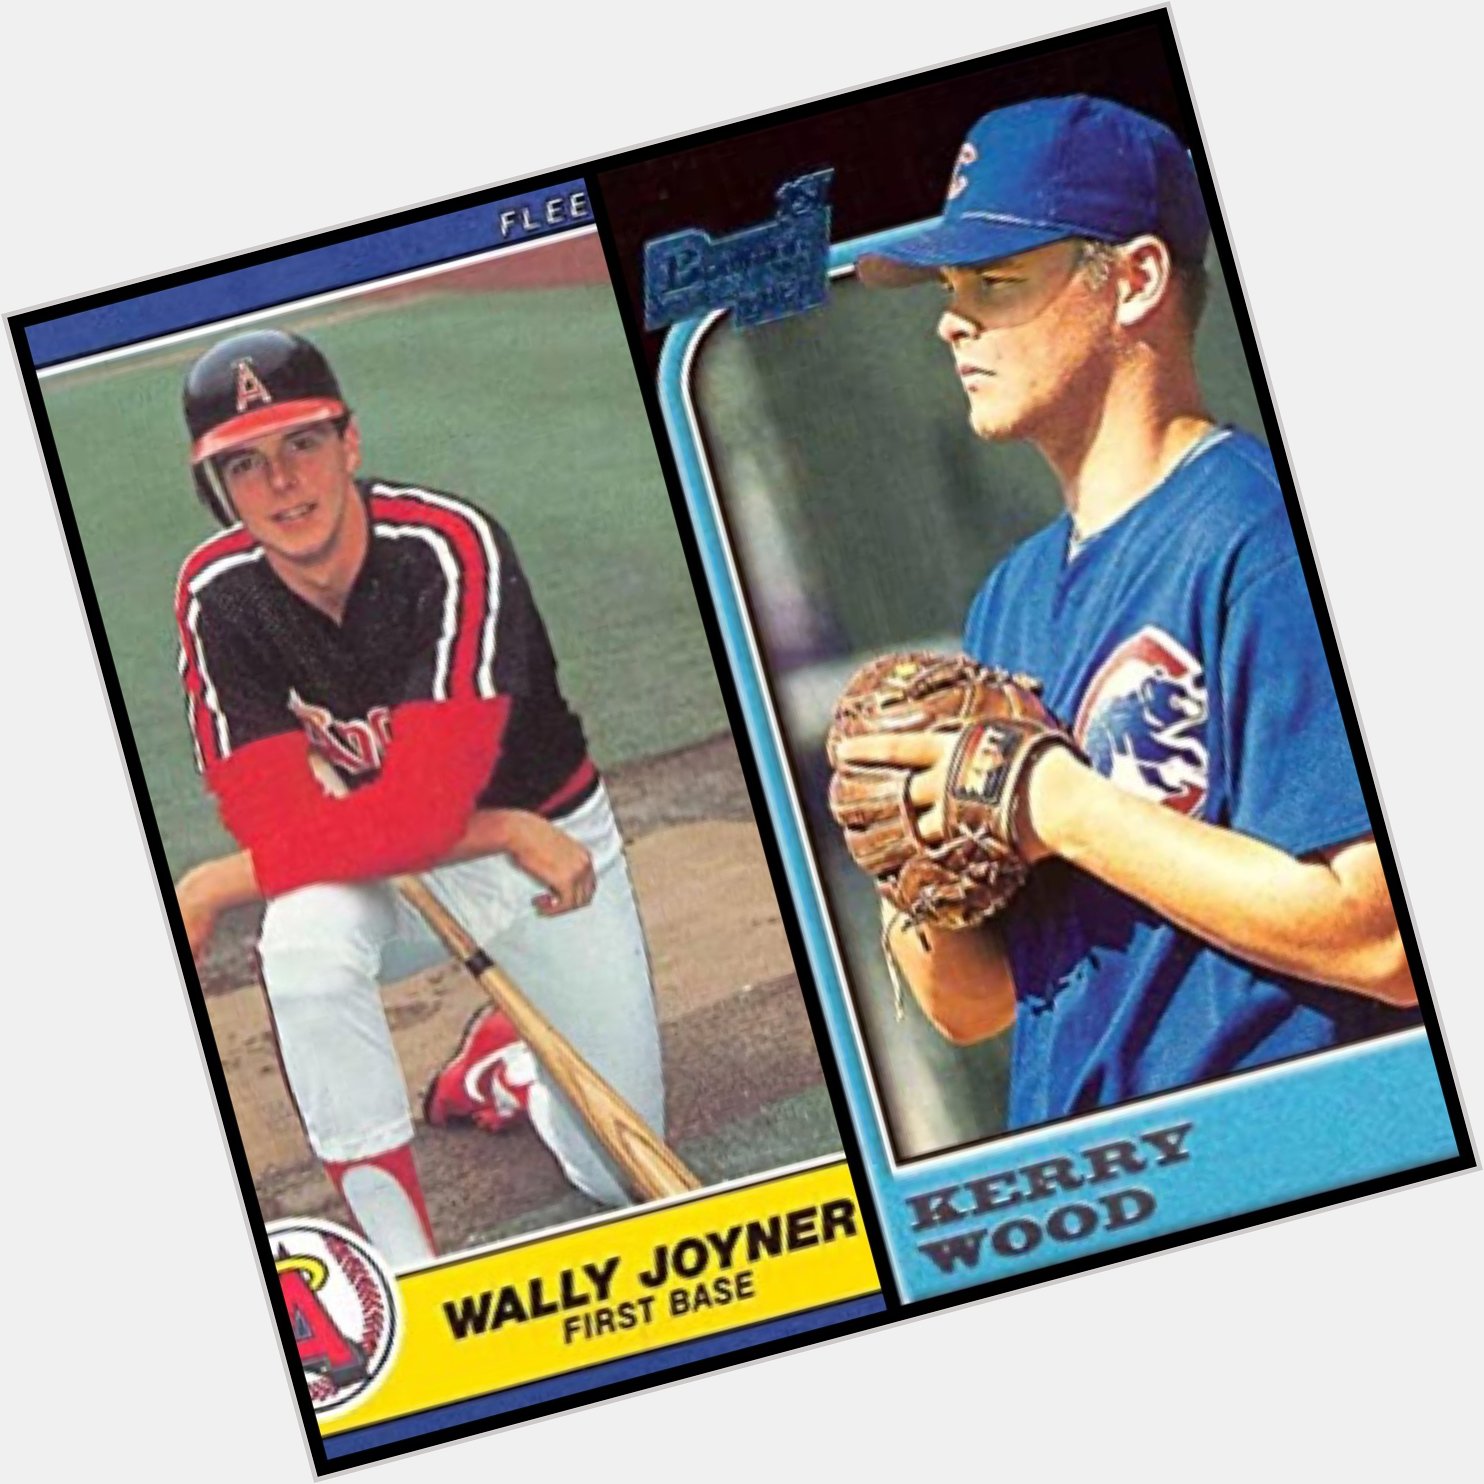 Happy Birthday Wally Joyner and Kerry Wood!

Draft one, trade one! 